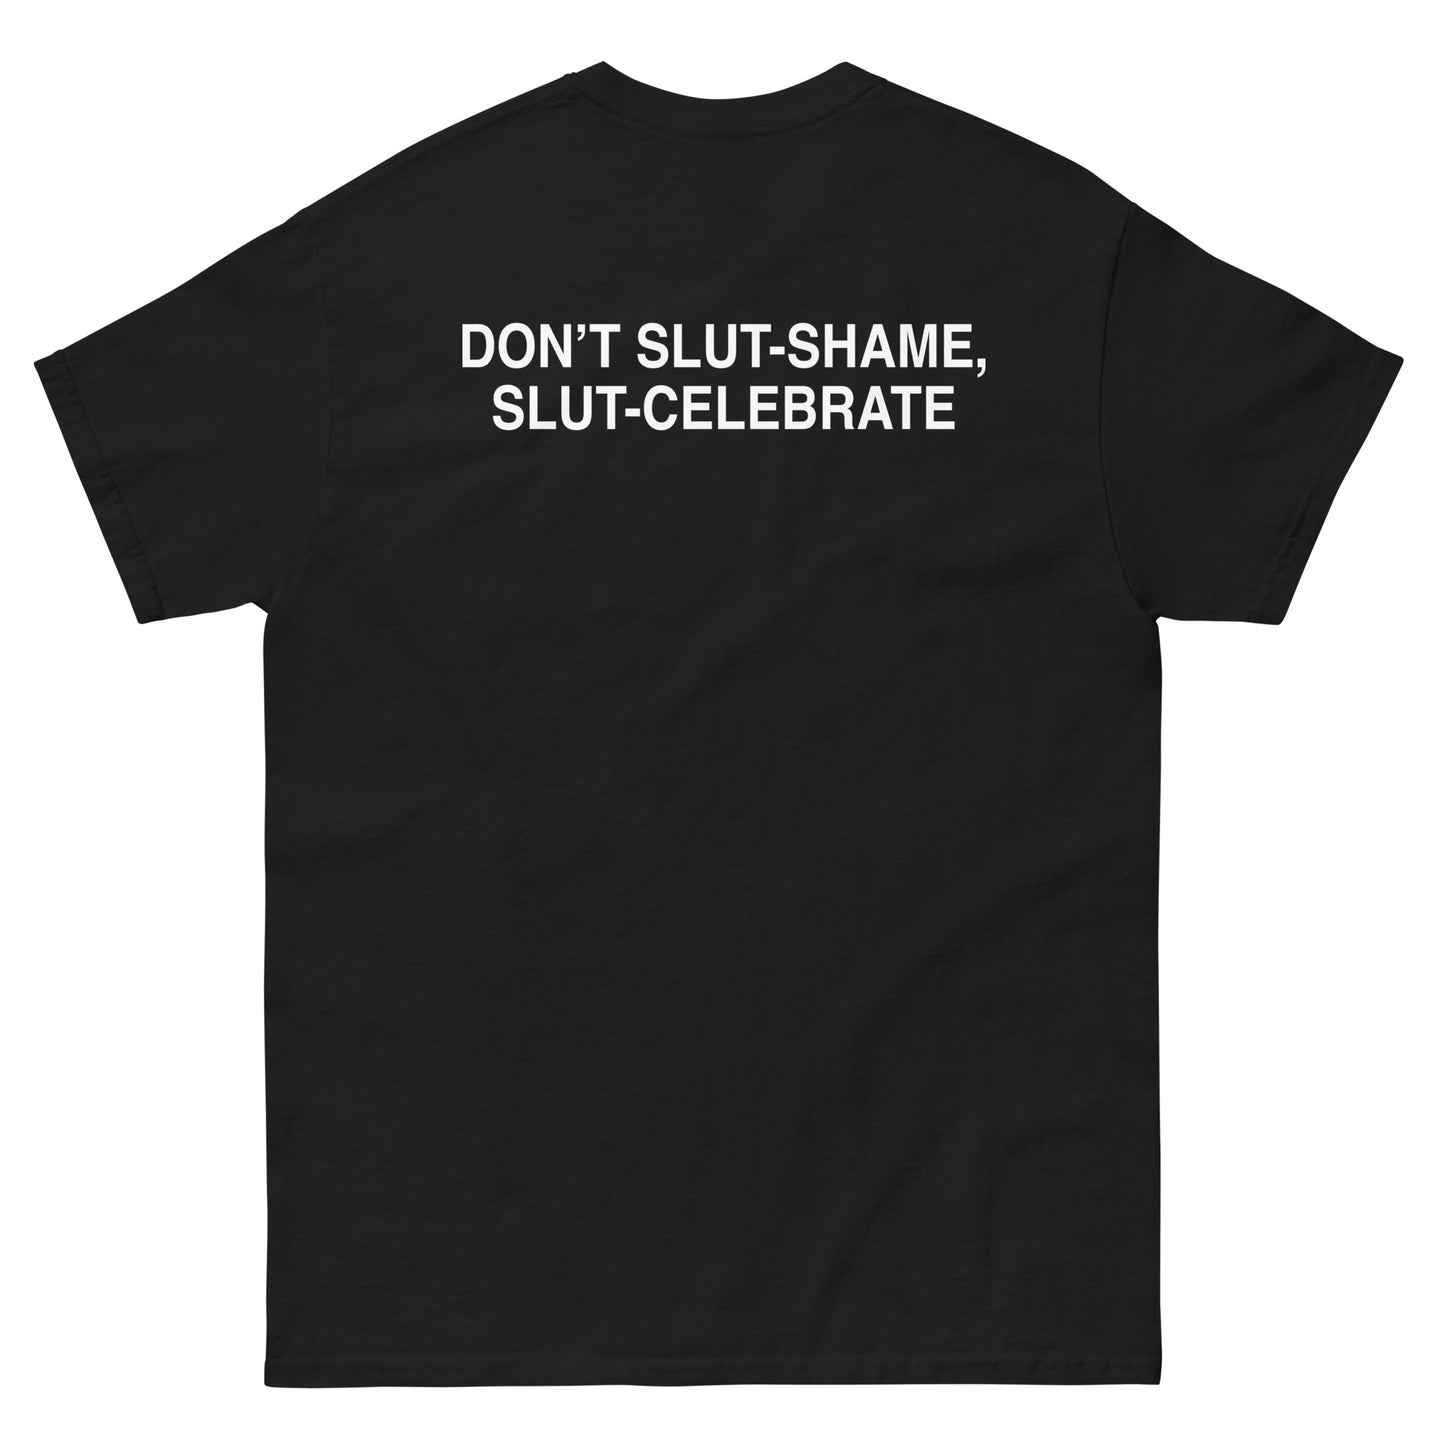 Don't Slut-Shame, Slut-Celebrate.